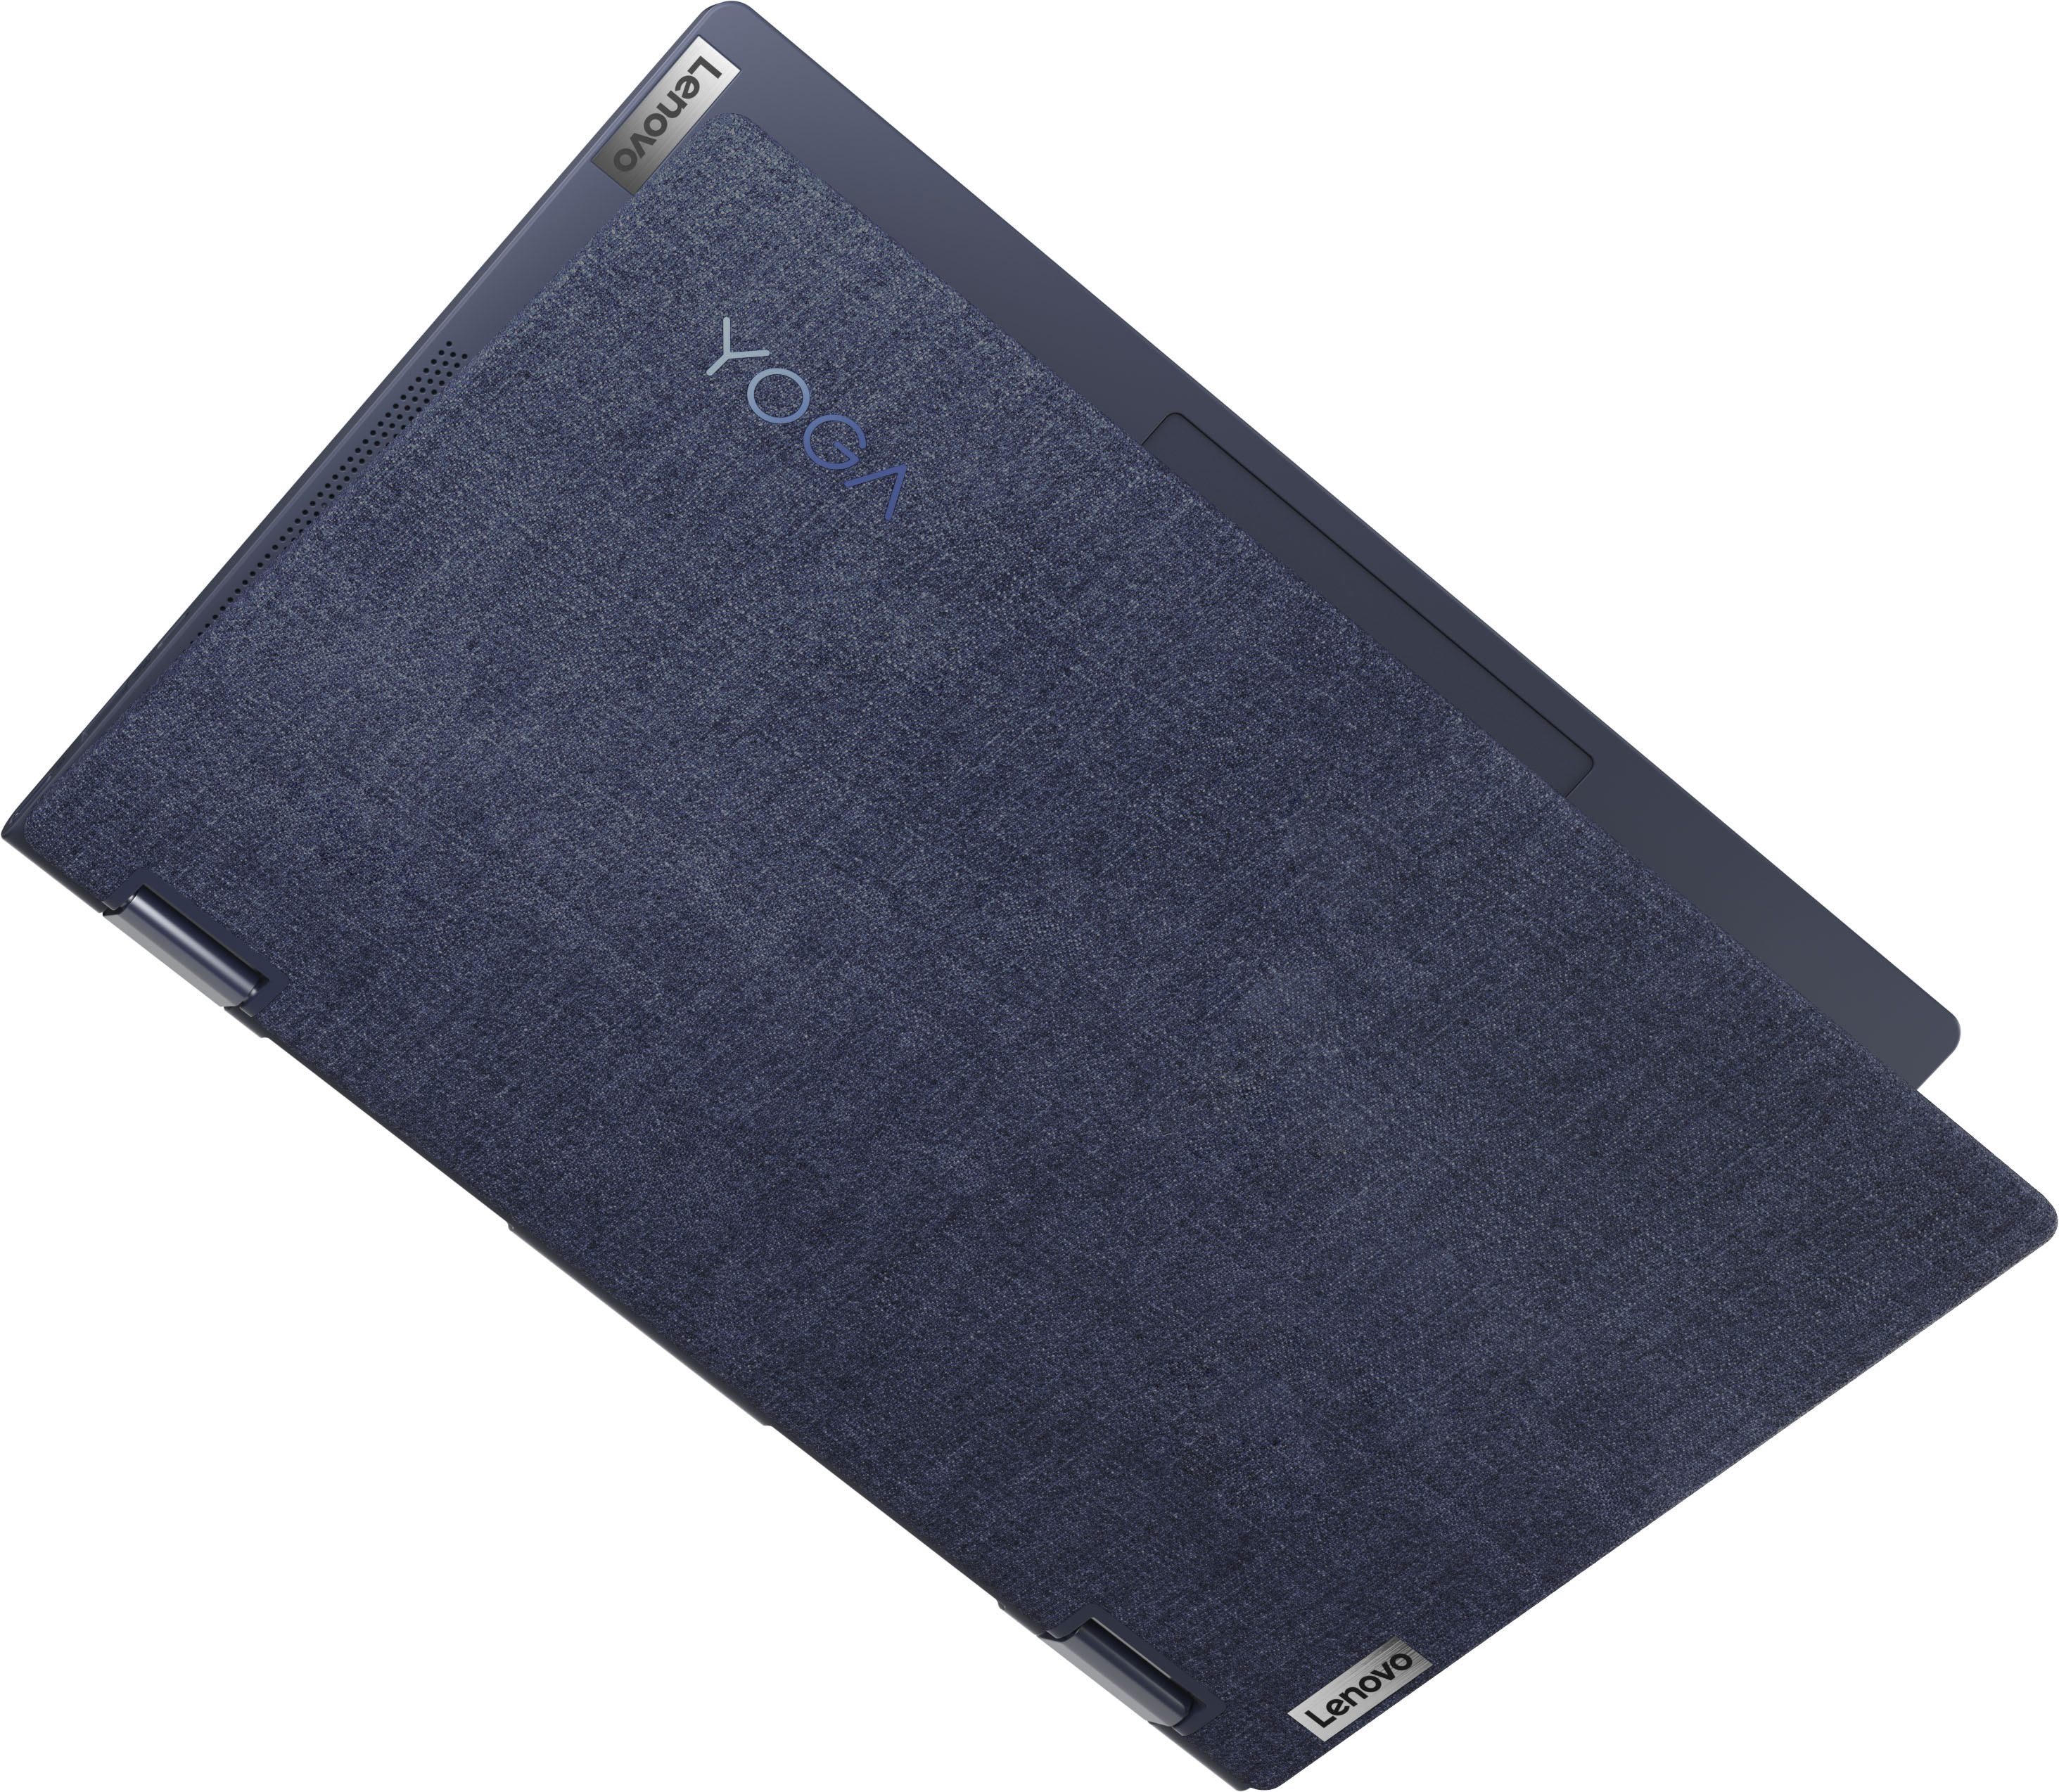 The Lenovo Yoga 6 13 2-in-1 fabric feels like an old shirt -   News